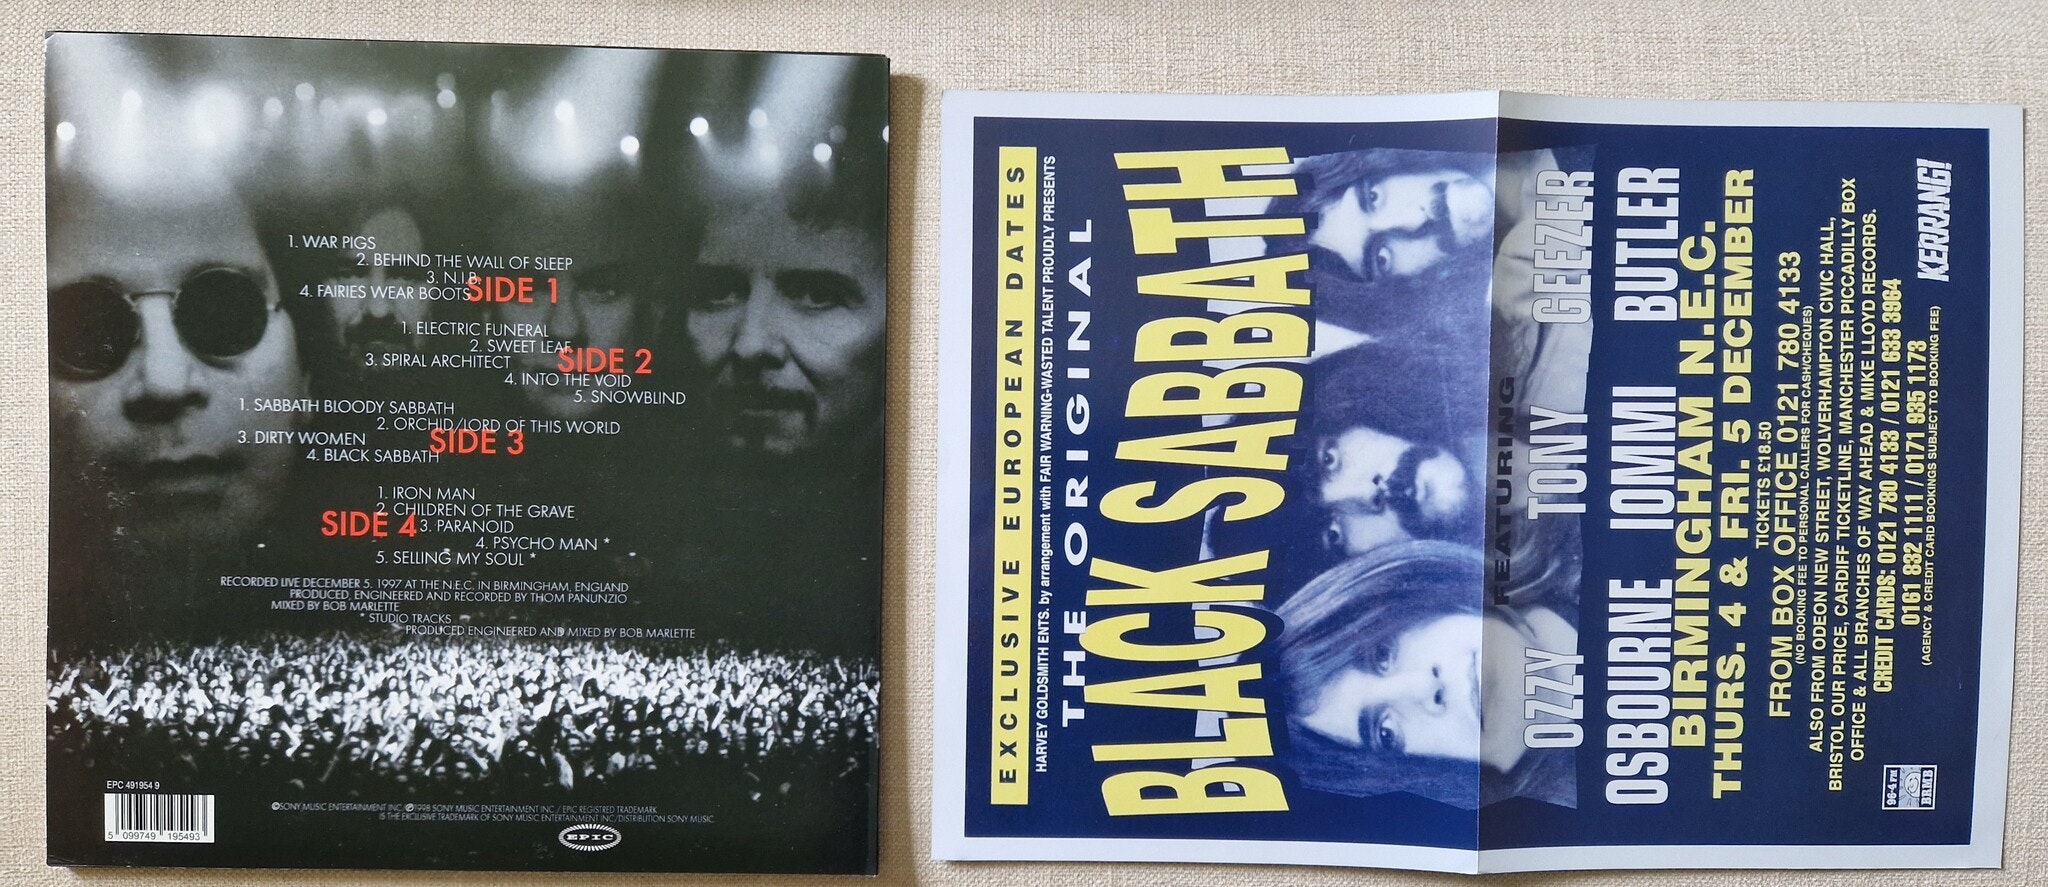 Black Sabbath, Reunion. Vinyl 2LP